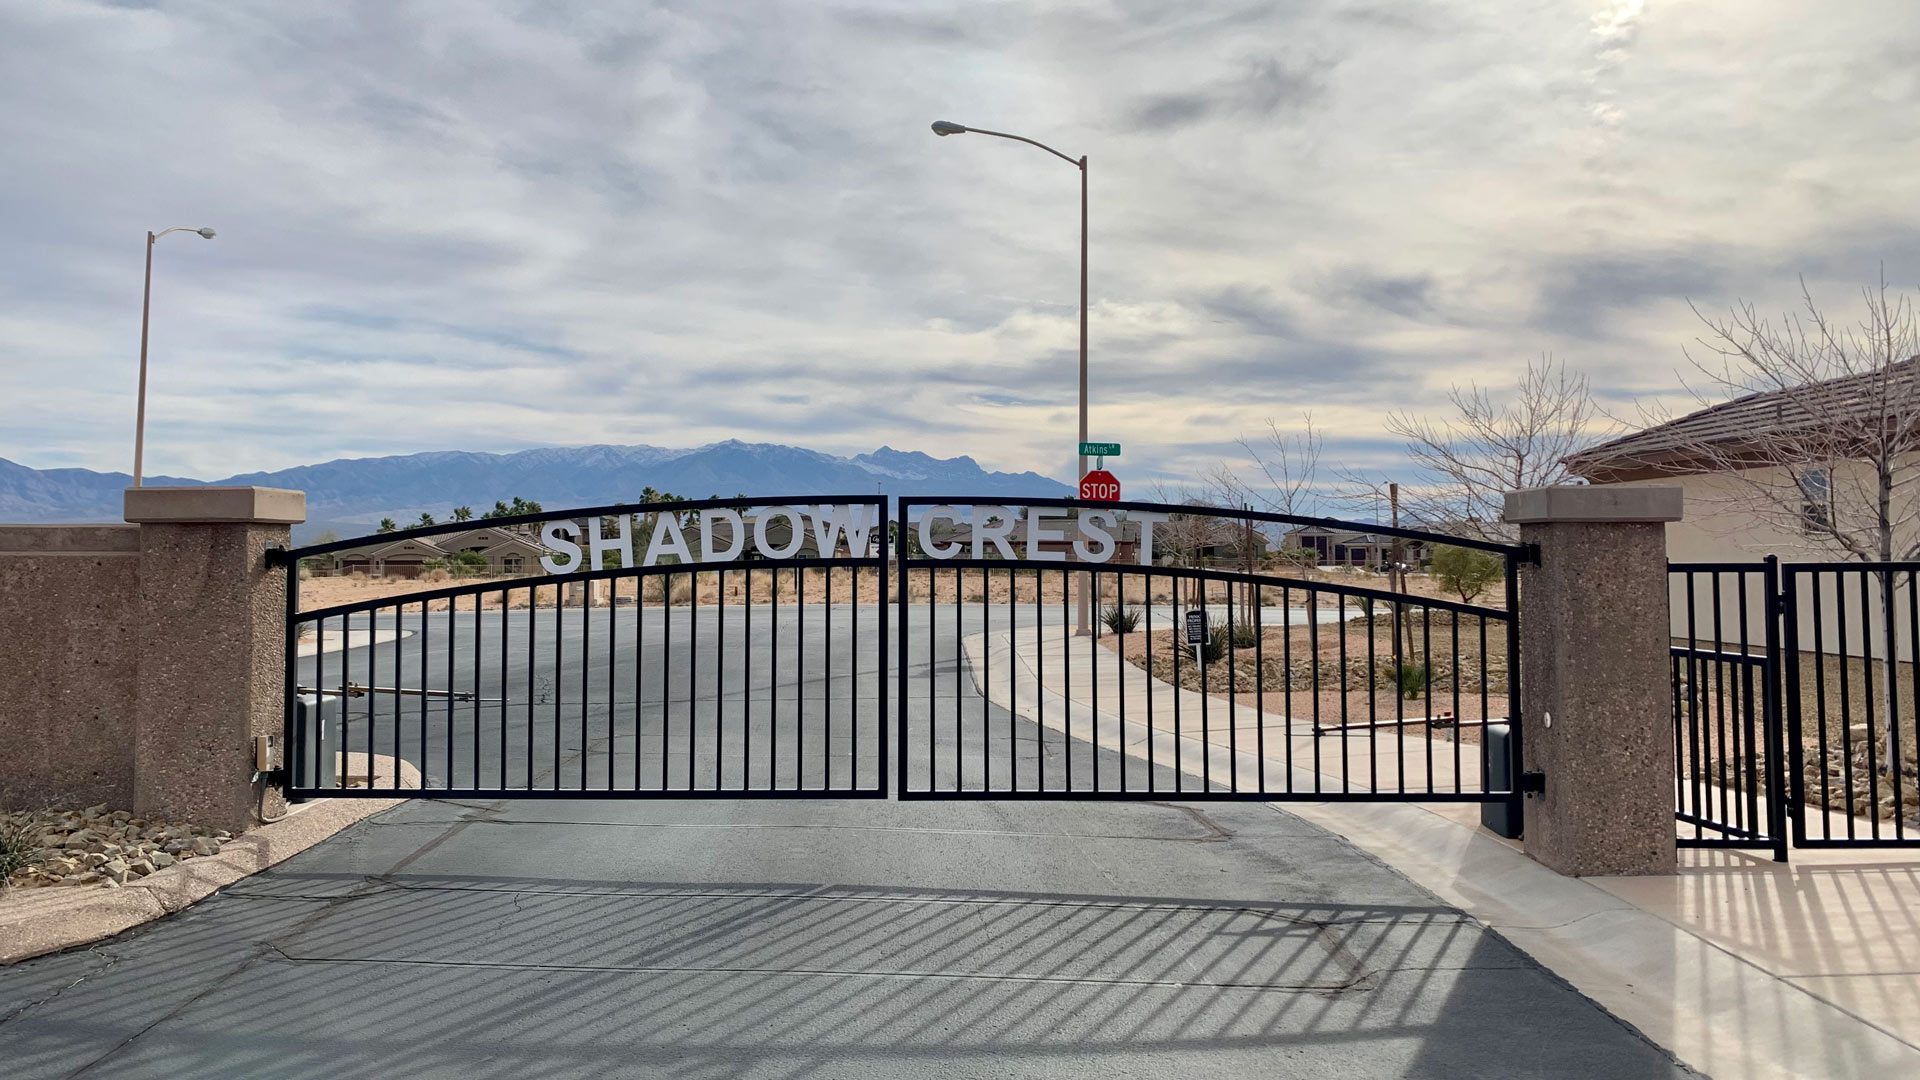 Shadow Crest Mesquite Nevada 55+ community